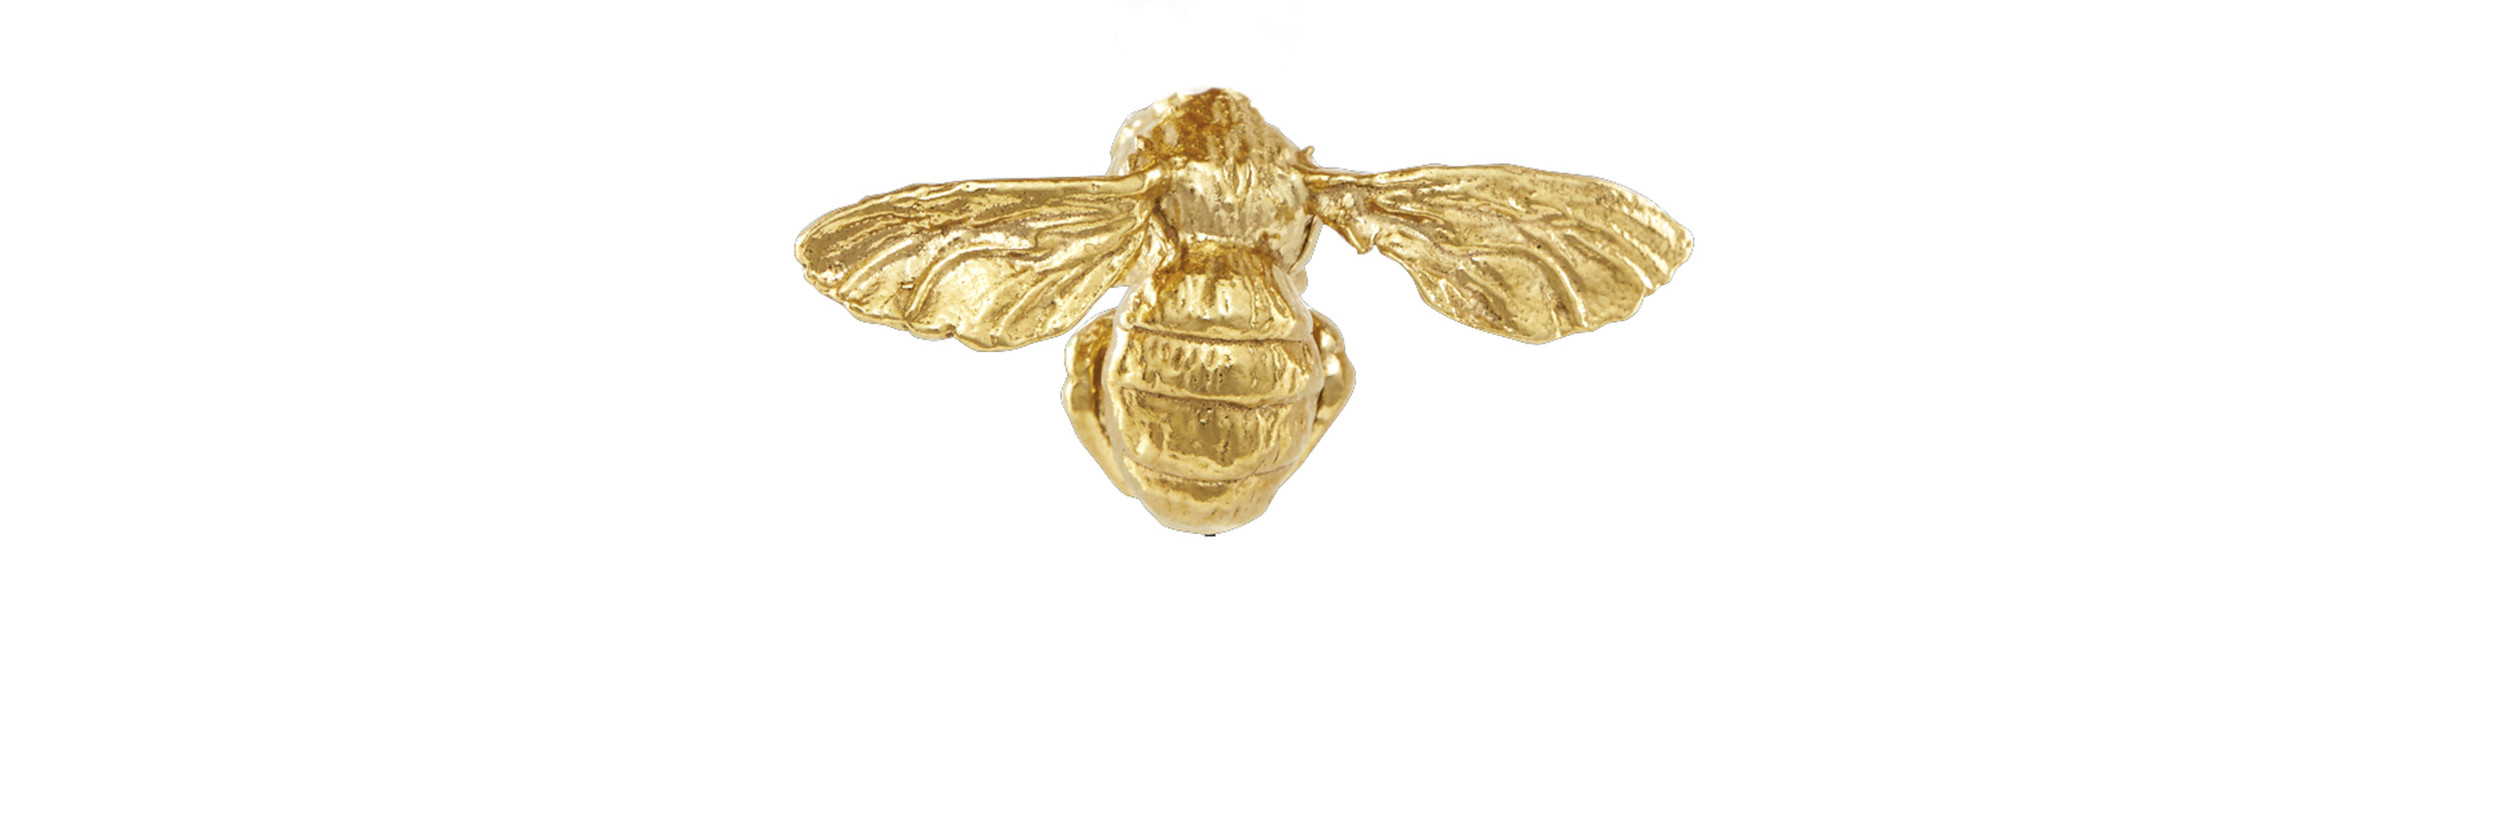 Online Exclusives – Gold Honeybee Brooch Pin by Catherine Zoraida